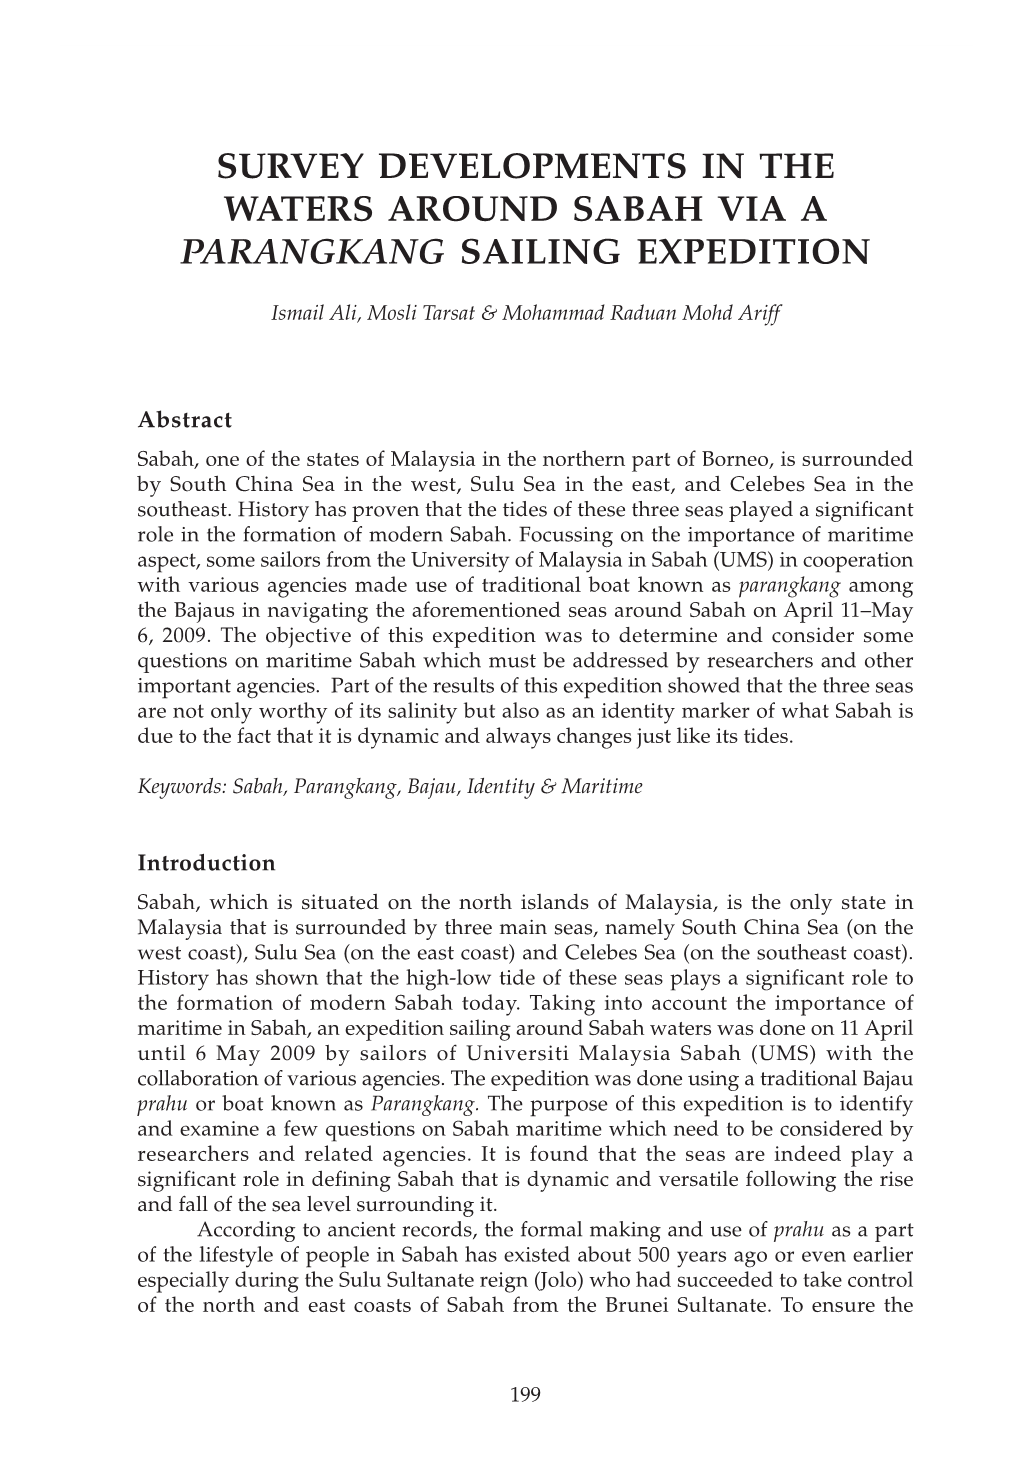 Survey Developments in the Waters Around Sabah Via a Parangkang Sailing Expedition